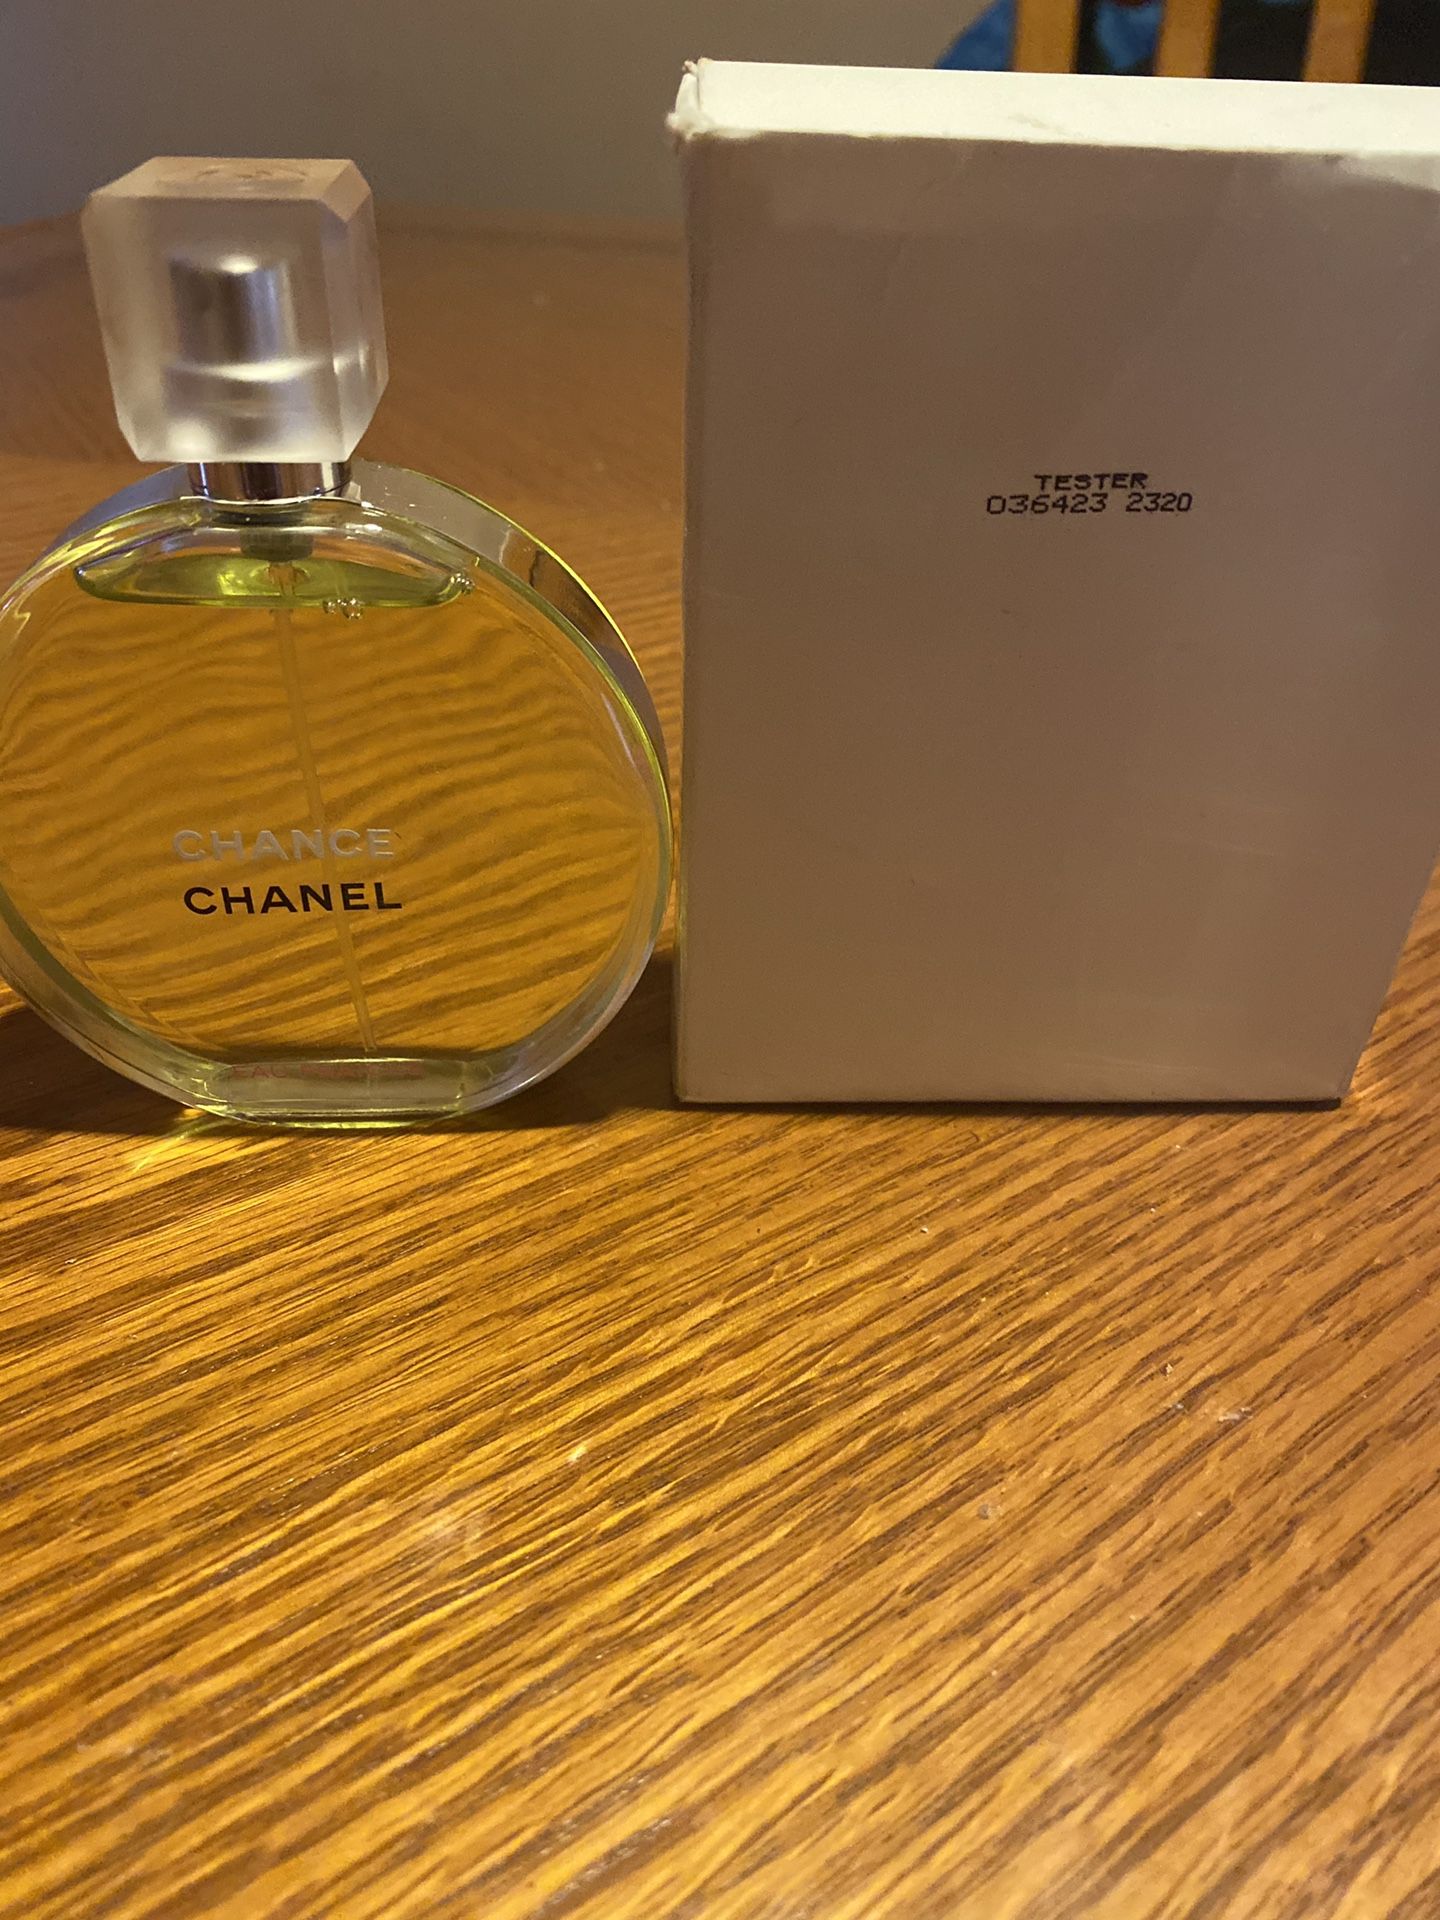 Chanel Chance Eau Fraiche Eau De Toilette 3.4 Oz. Tester w/ Tester Box 100% AUTHENTIC! WOMEN PERFUME (BRAND NEW)